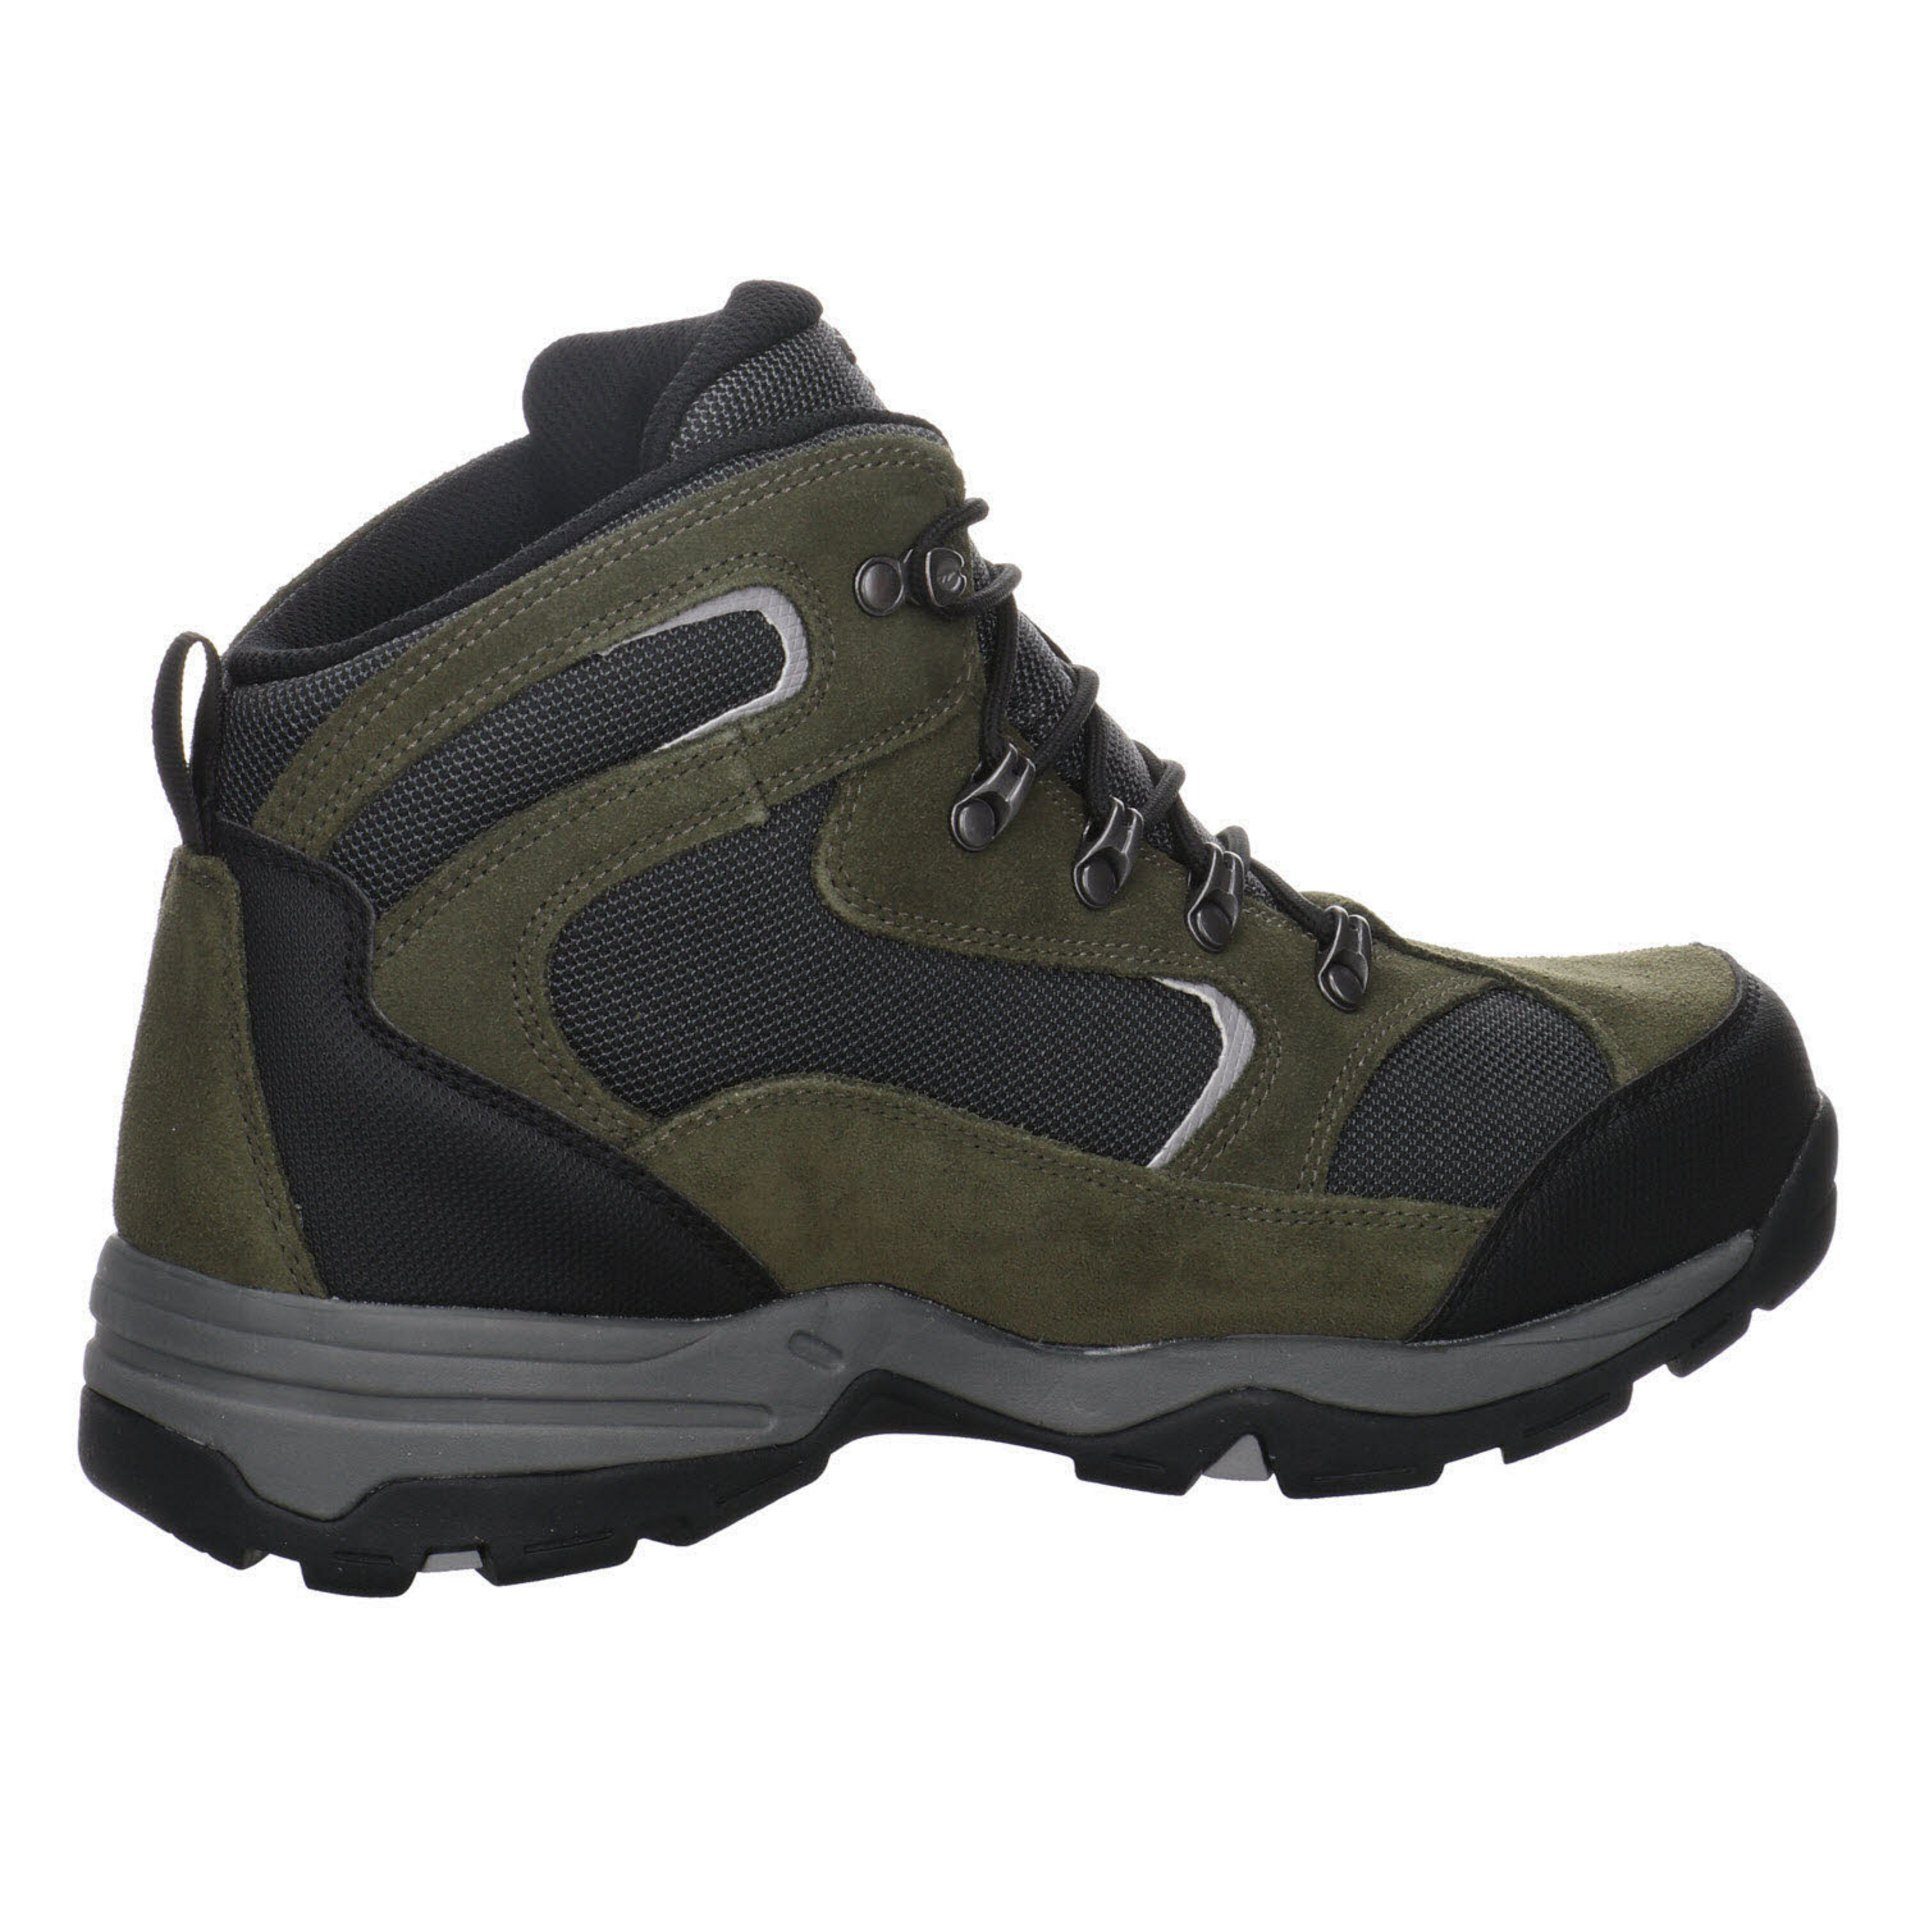 WP Storm Outdoor Schuhe Herren OLIVE Outdoorschuh HI-TEC Leder-/Textilkombination NIGHT/GREY/BL Hi-Tec work Outdoorschuh